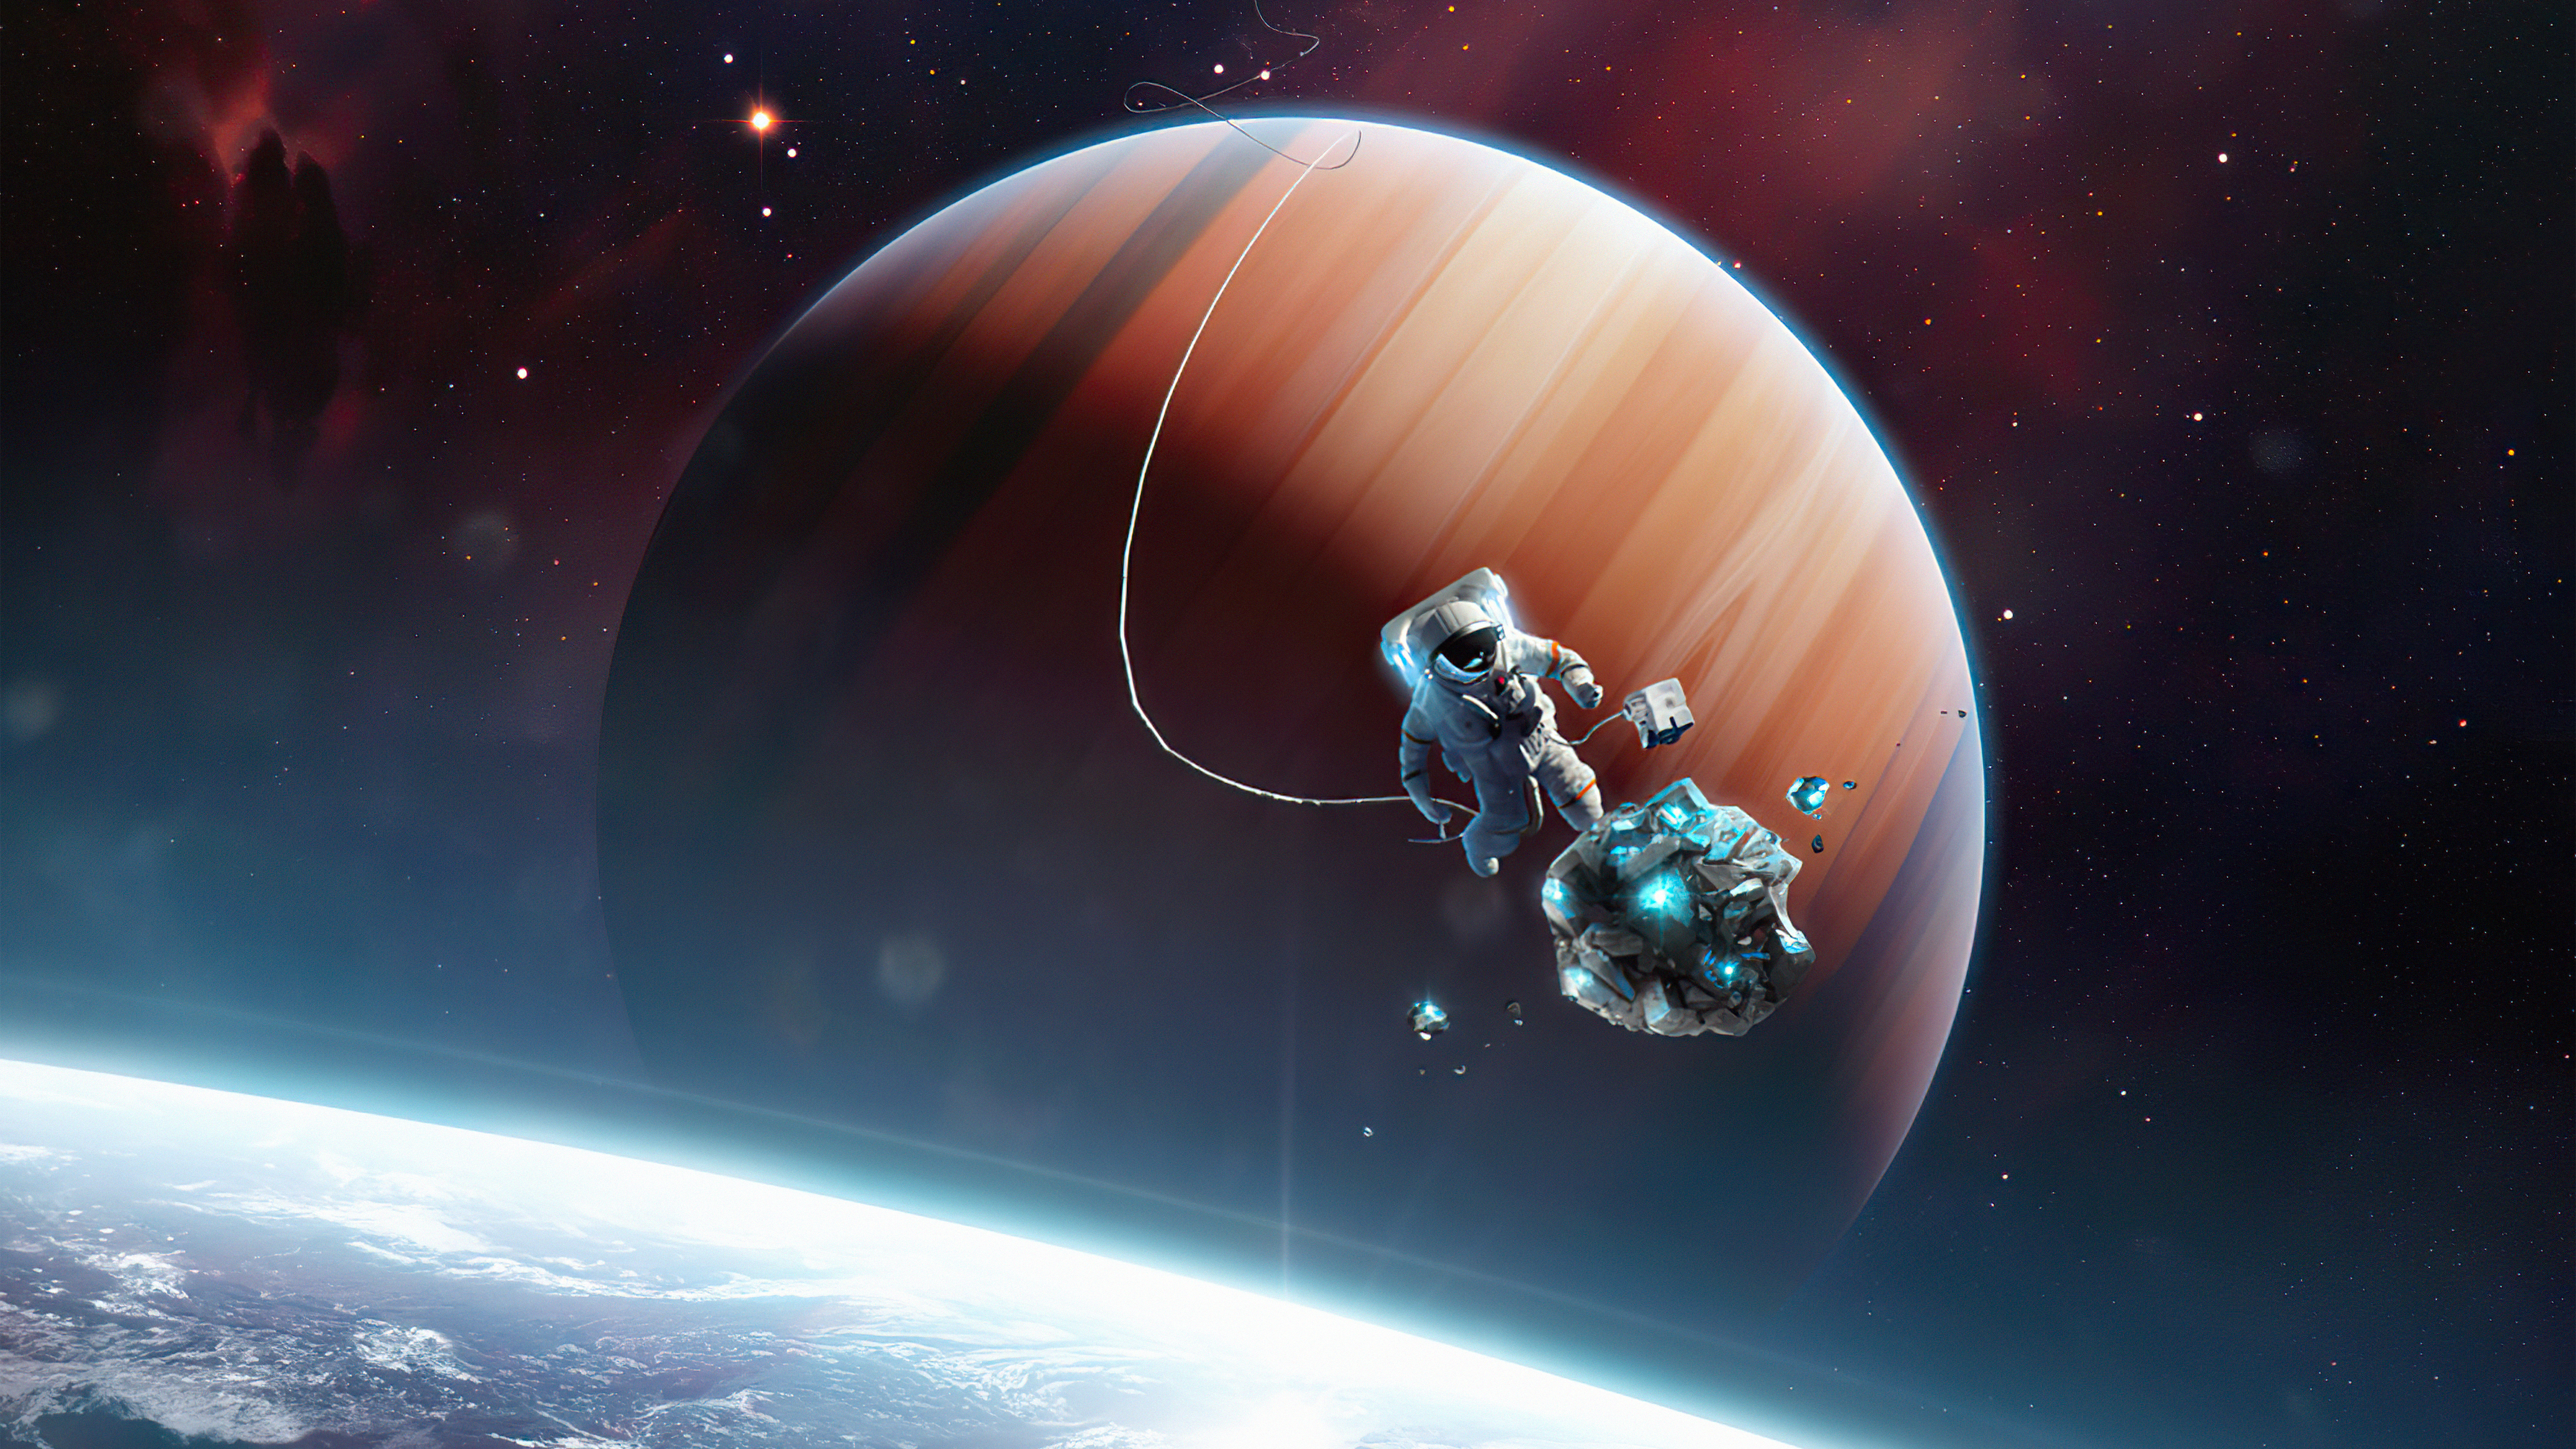 Wallpapers astronaut planet digital art on the desktop